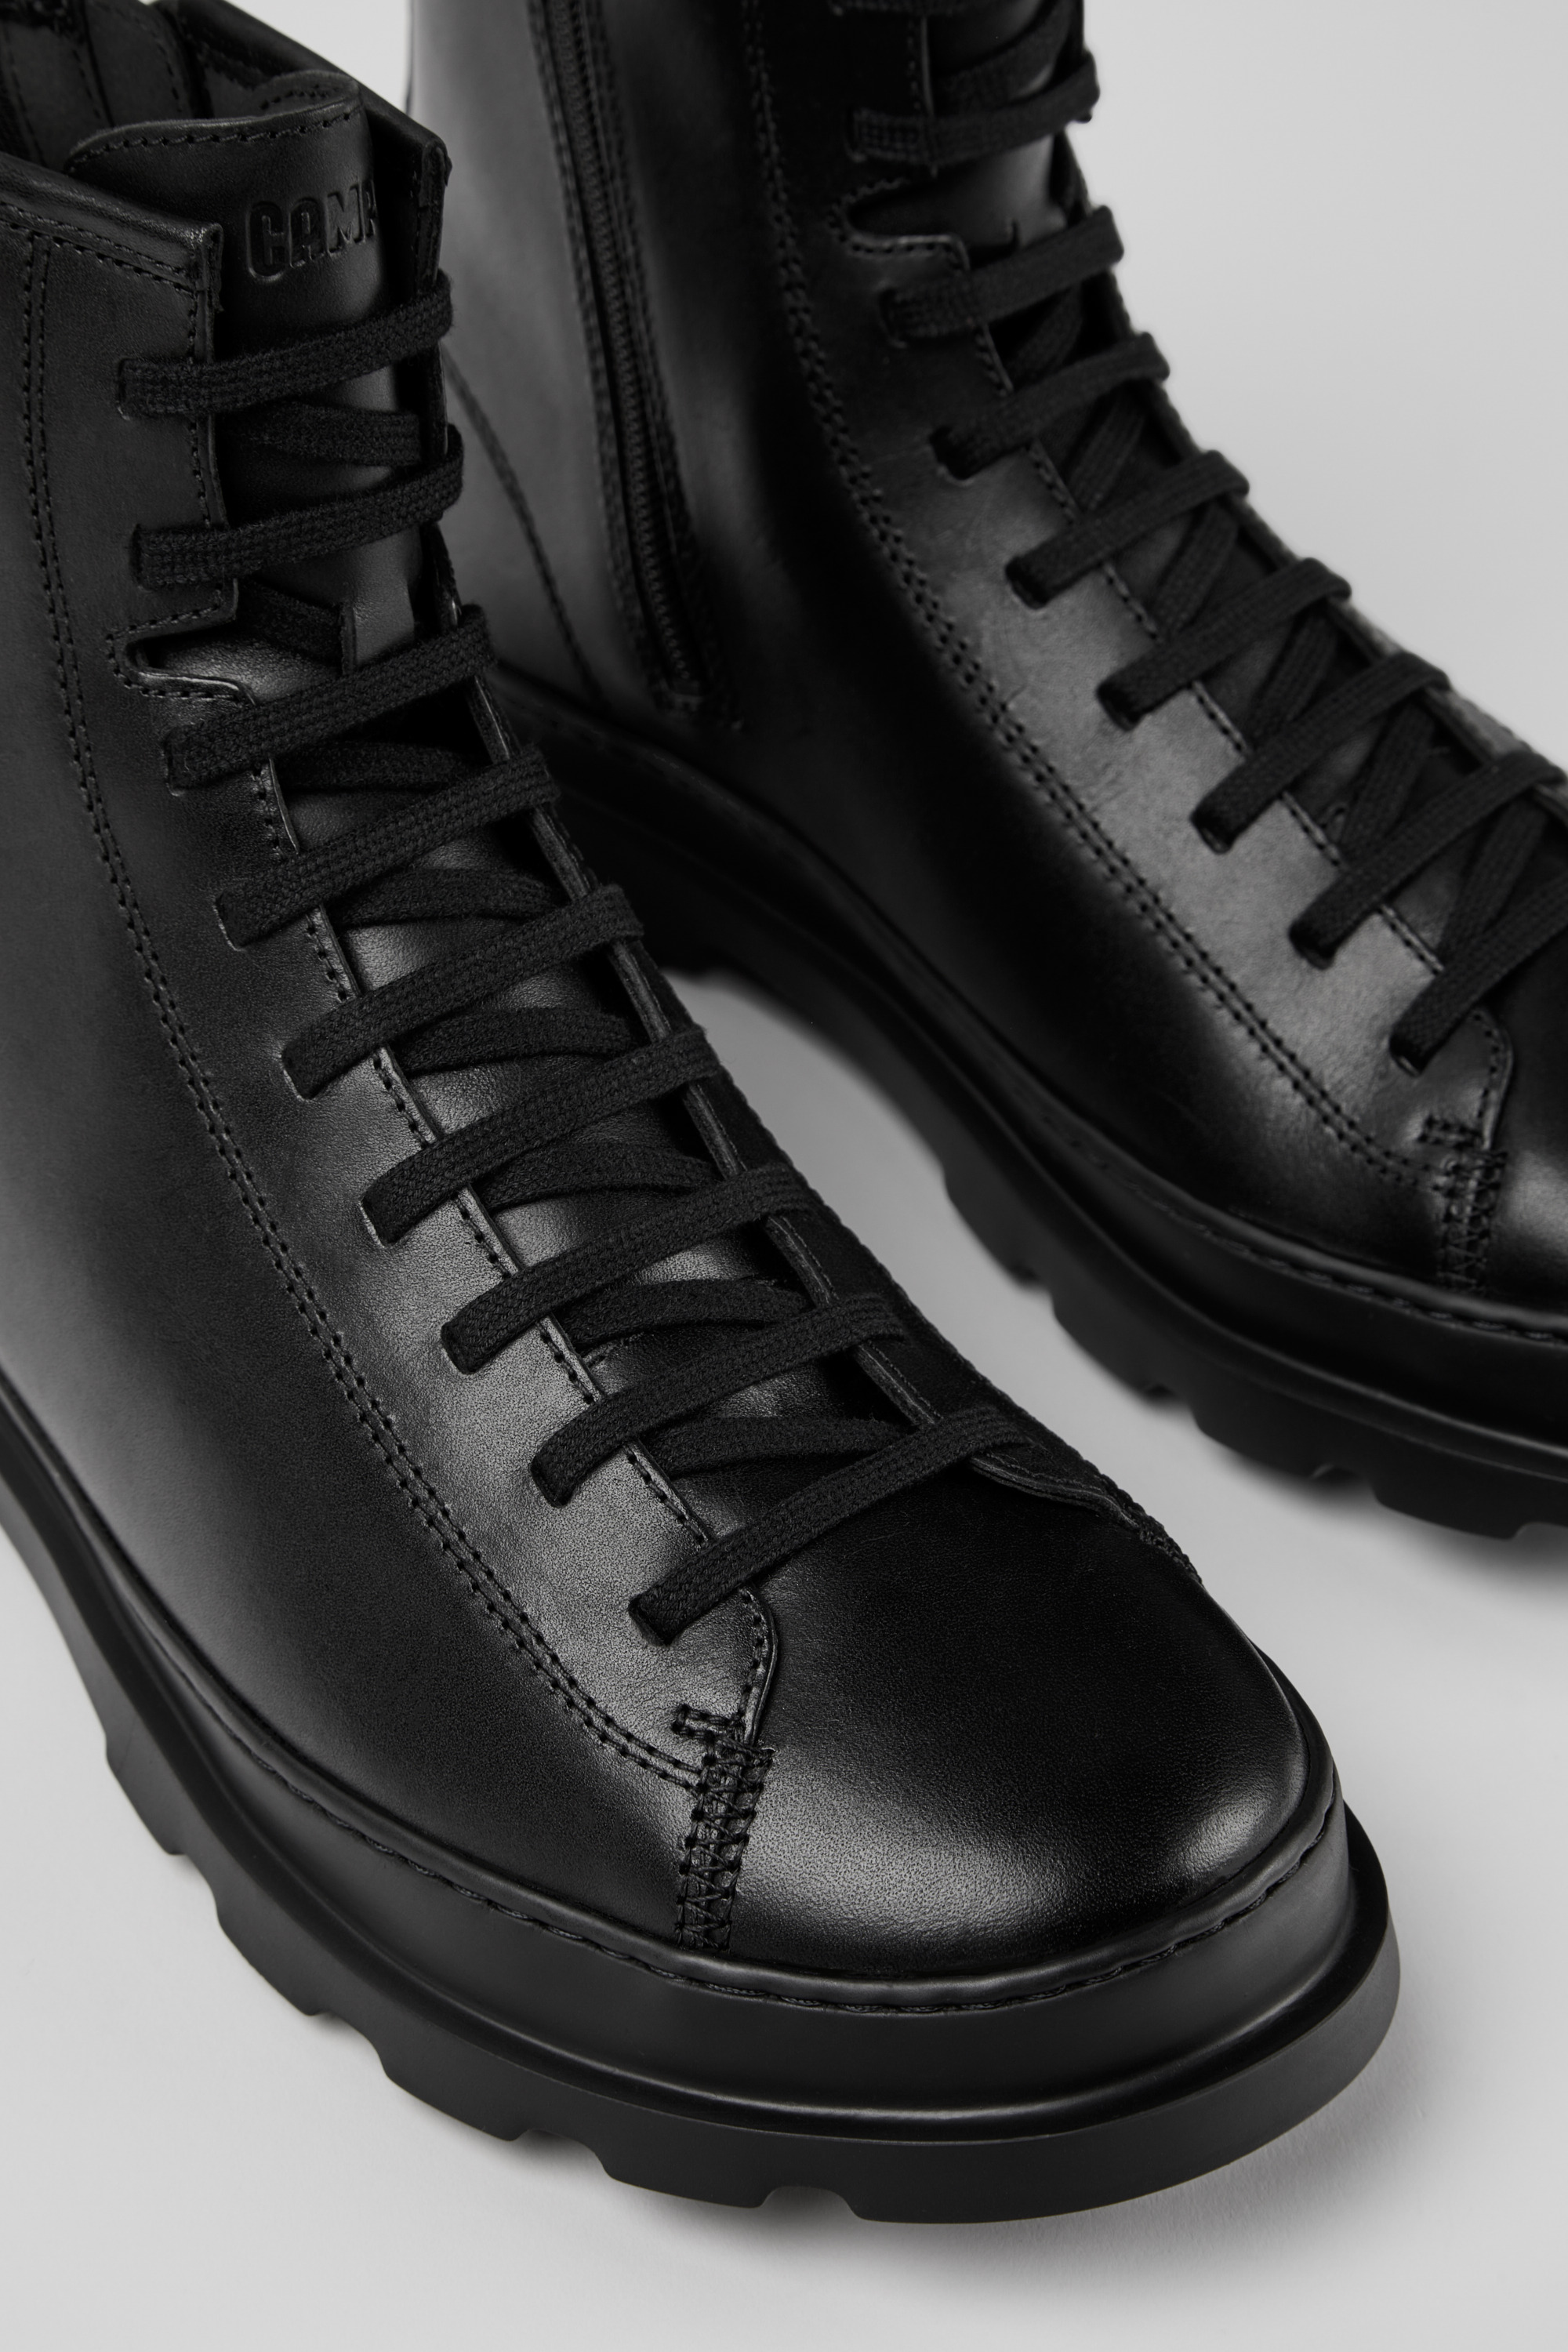 Denk vooruit Wat is er mis Marco Polo BRUTUS Black Ankle Boots for Men - Spring/Summer collection - Camper Saudi  Arabia